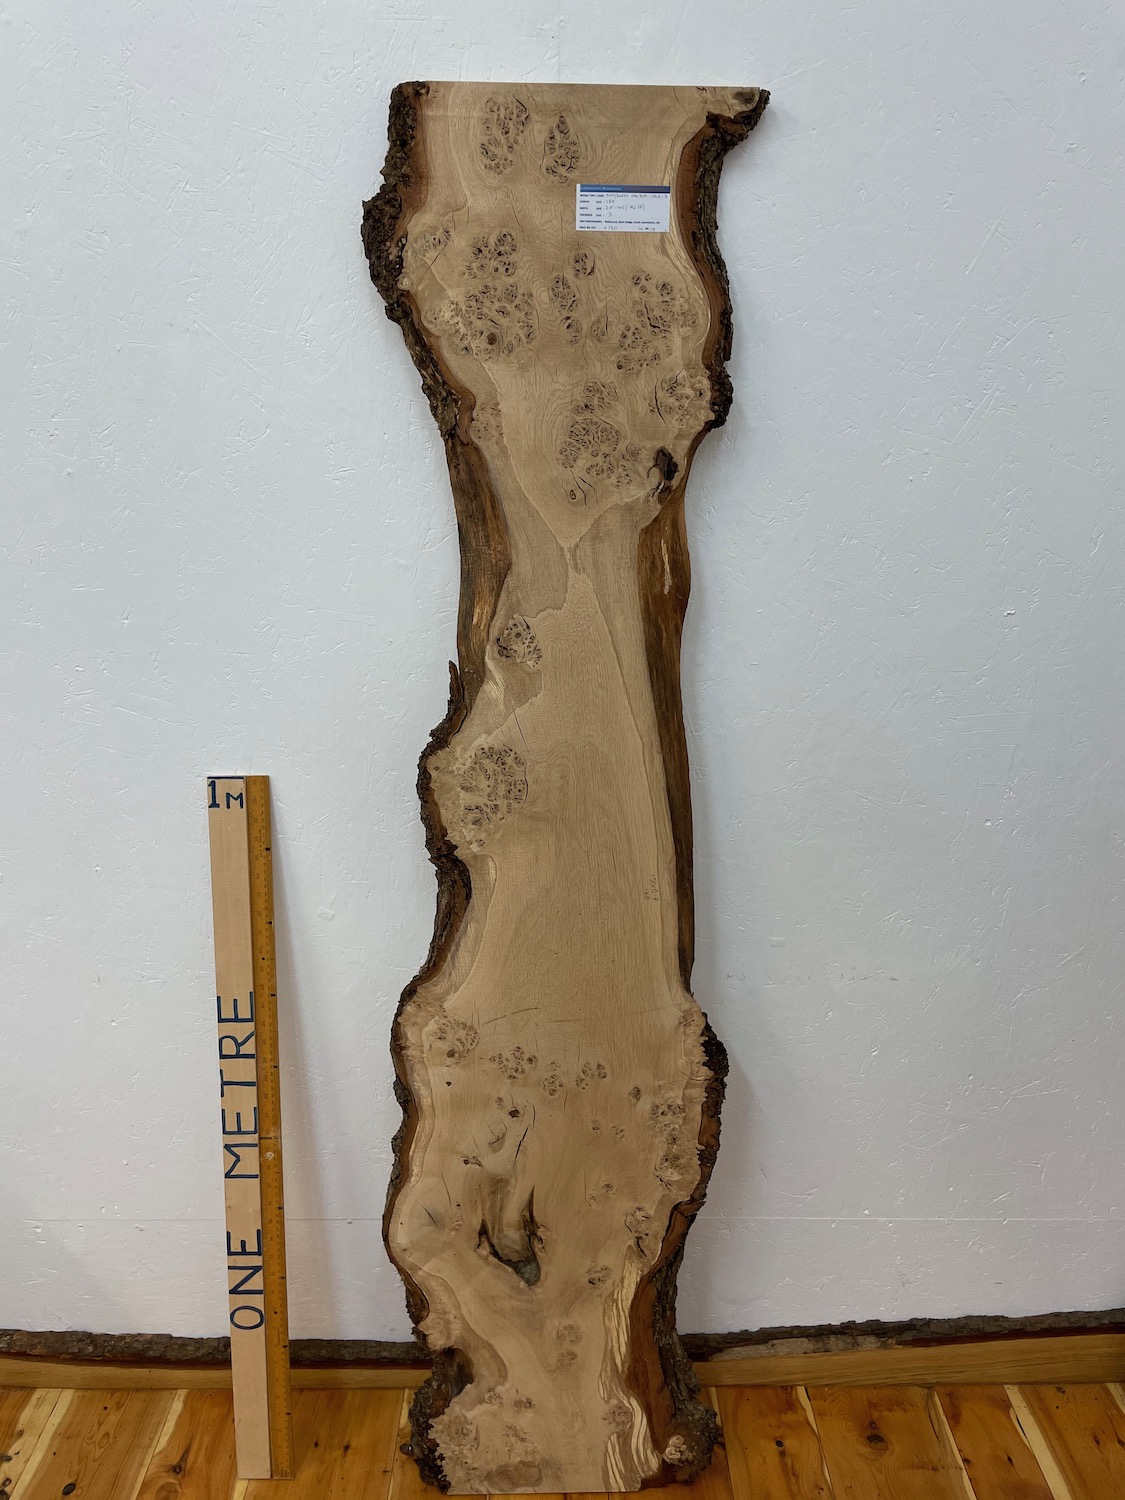 PIPPY / BURRY OAK Natural Waney Edge Slab Wood Timber Board 1561B-7 Thickness 3cm Kiln Dried Planed & Thicknessed Seasoned Hardwood Wildwood Wallart